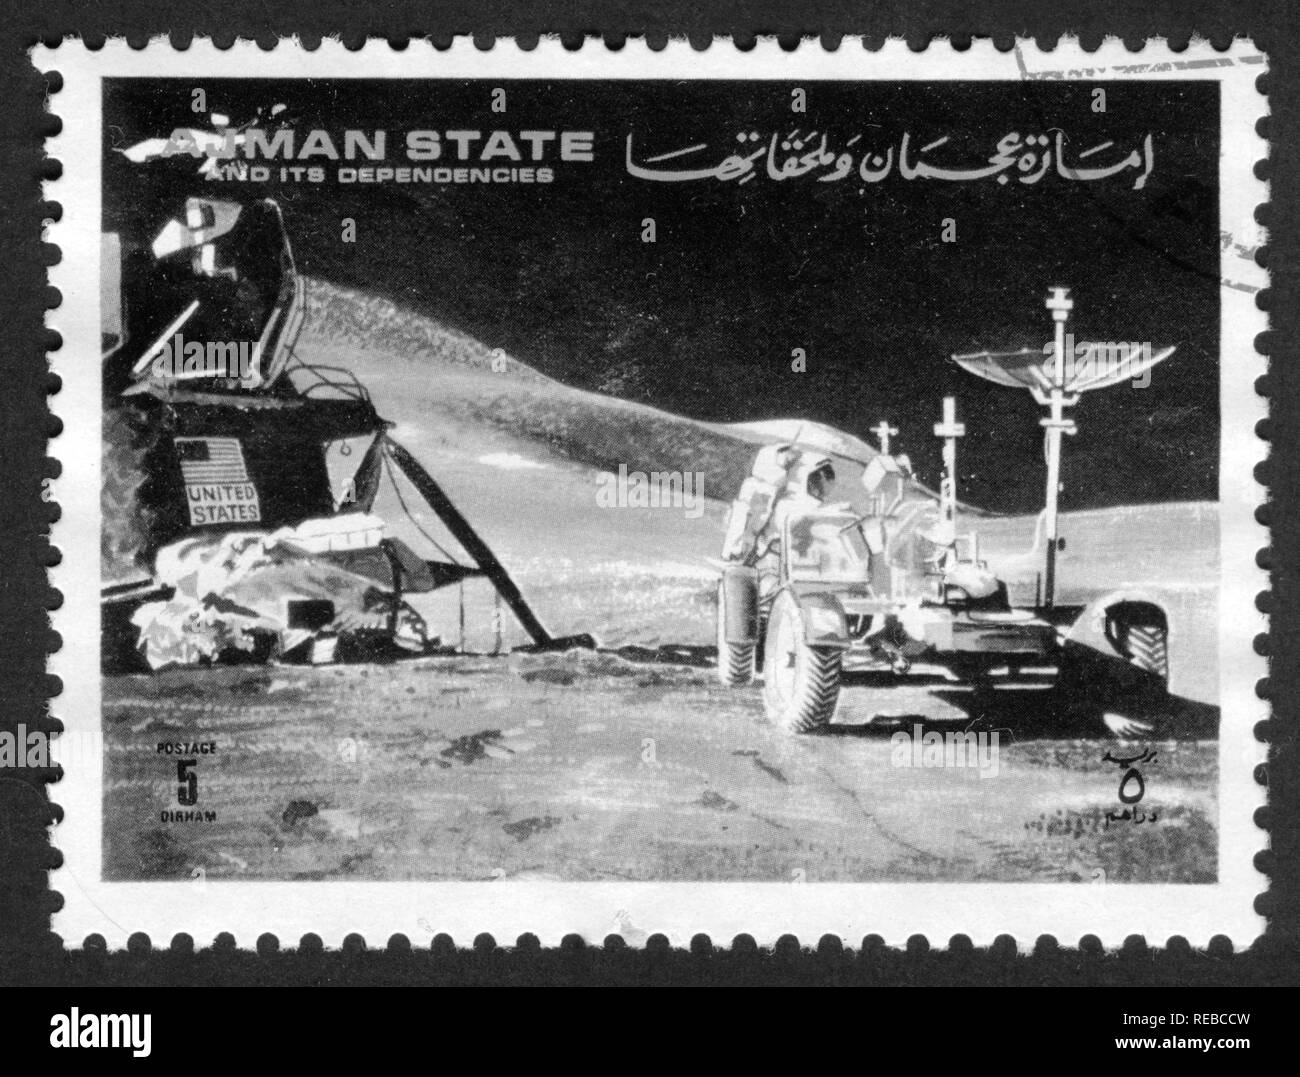 Stamp print in Ajman state Stock Photo